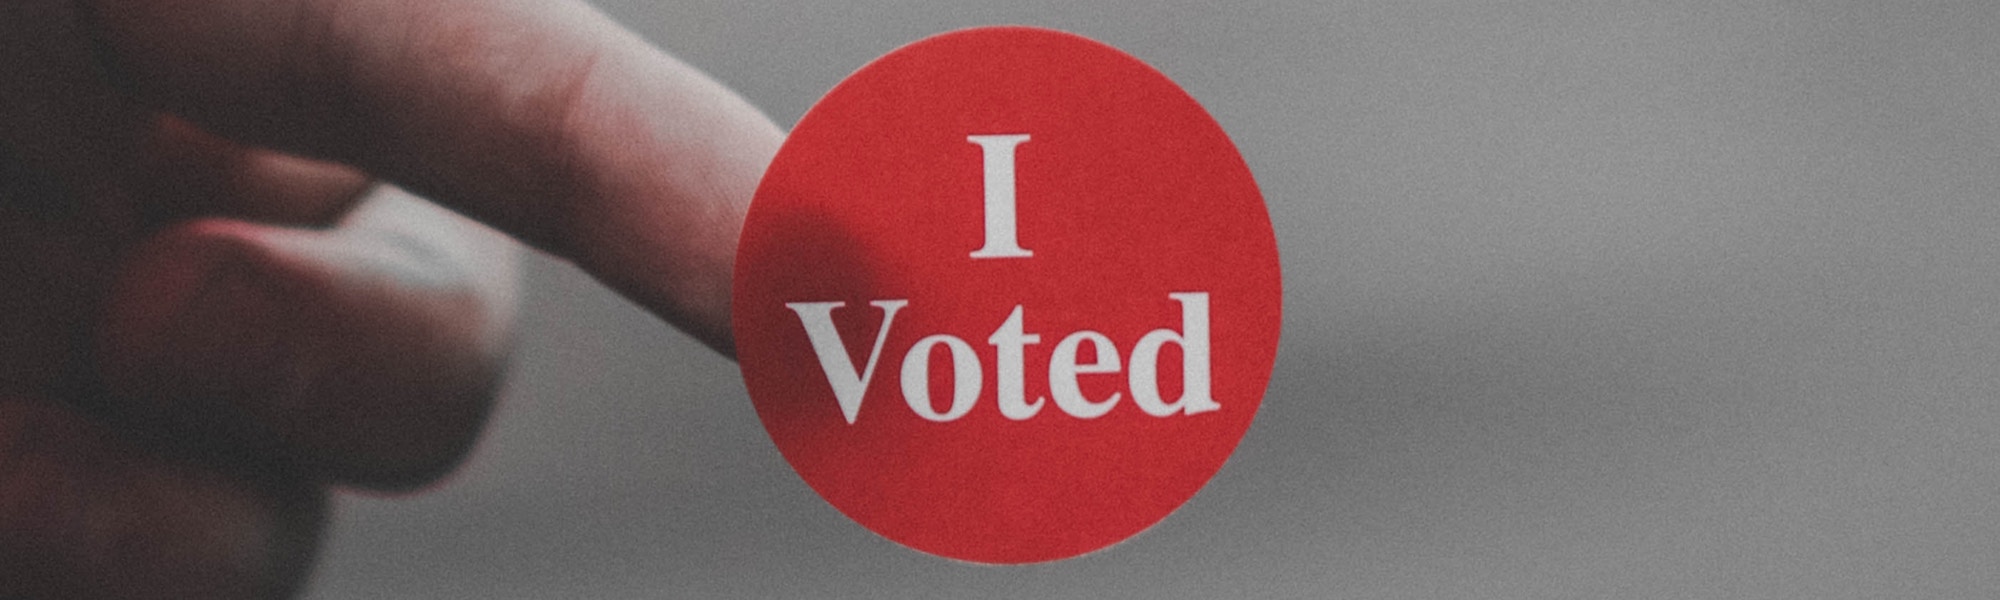 Politics "I voted sticker"